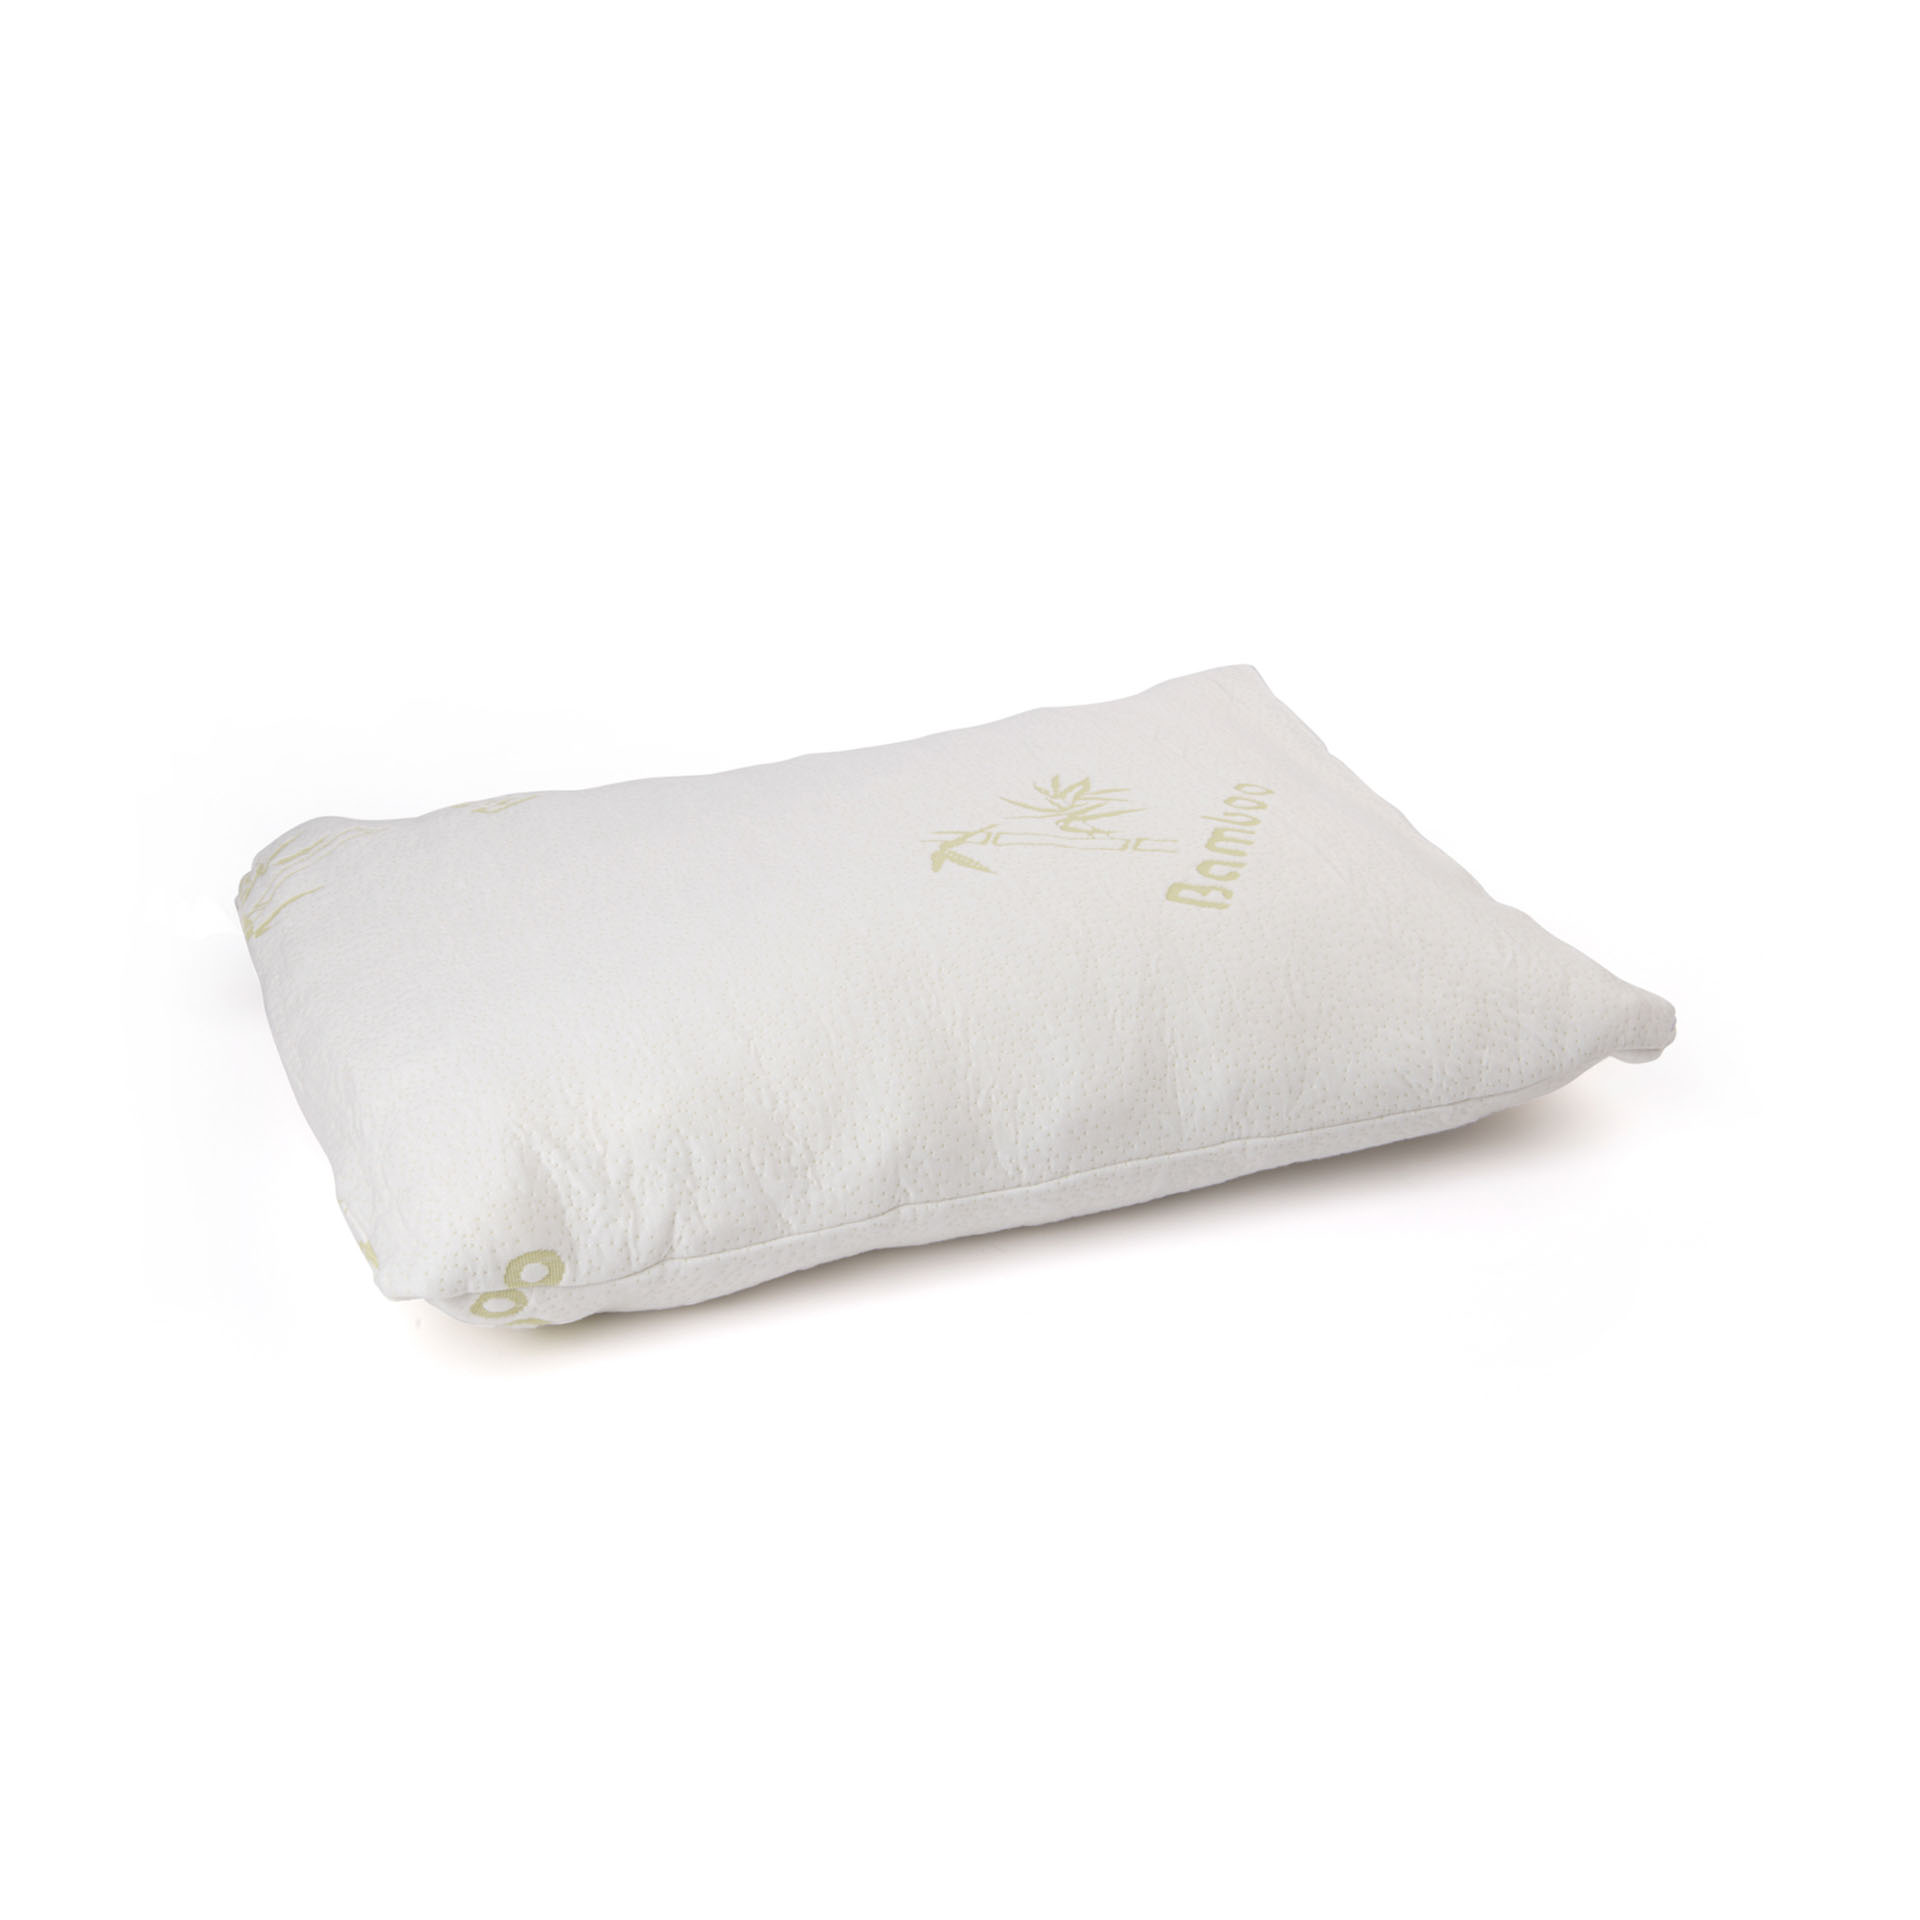 Cuscino da letto in memory foam e fibra di bambù - Bamboo Pillow, , large